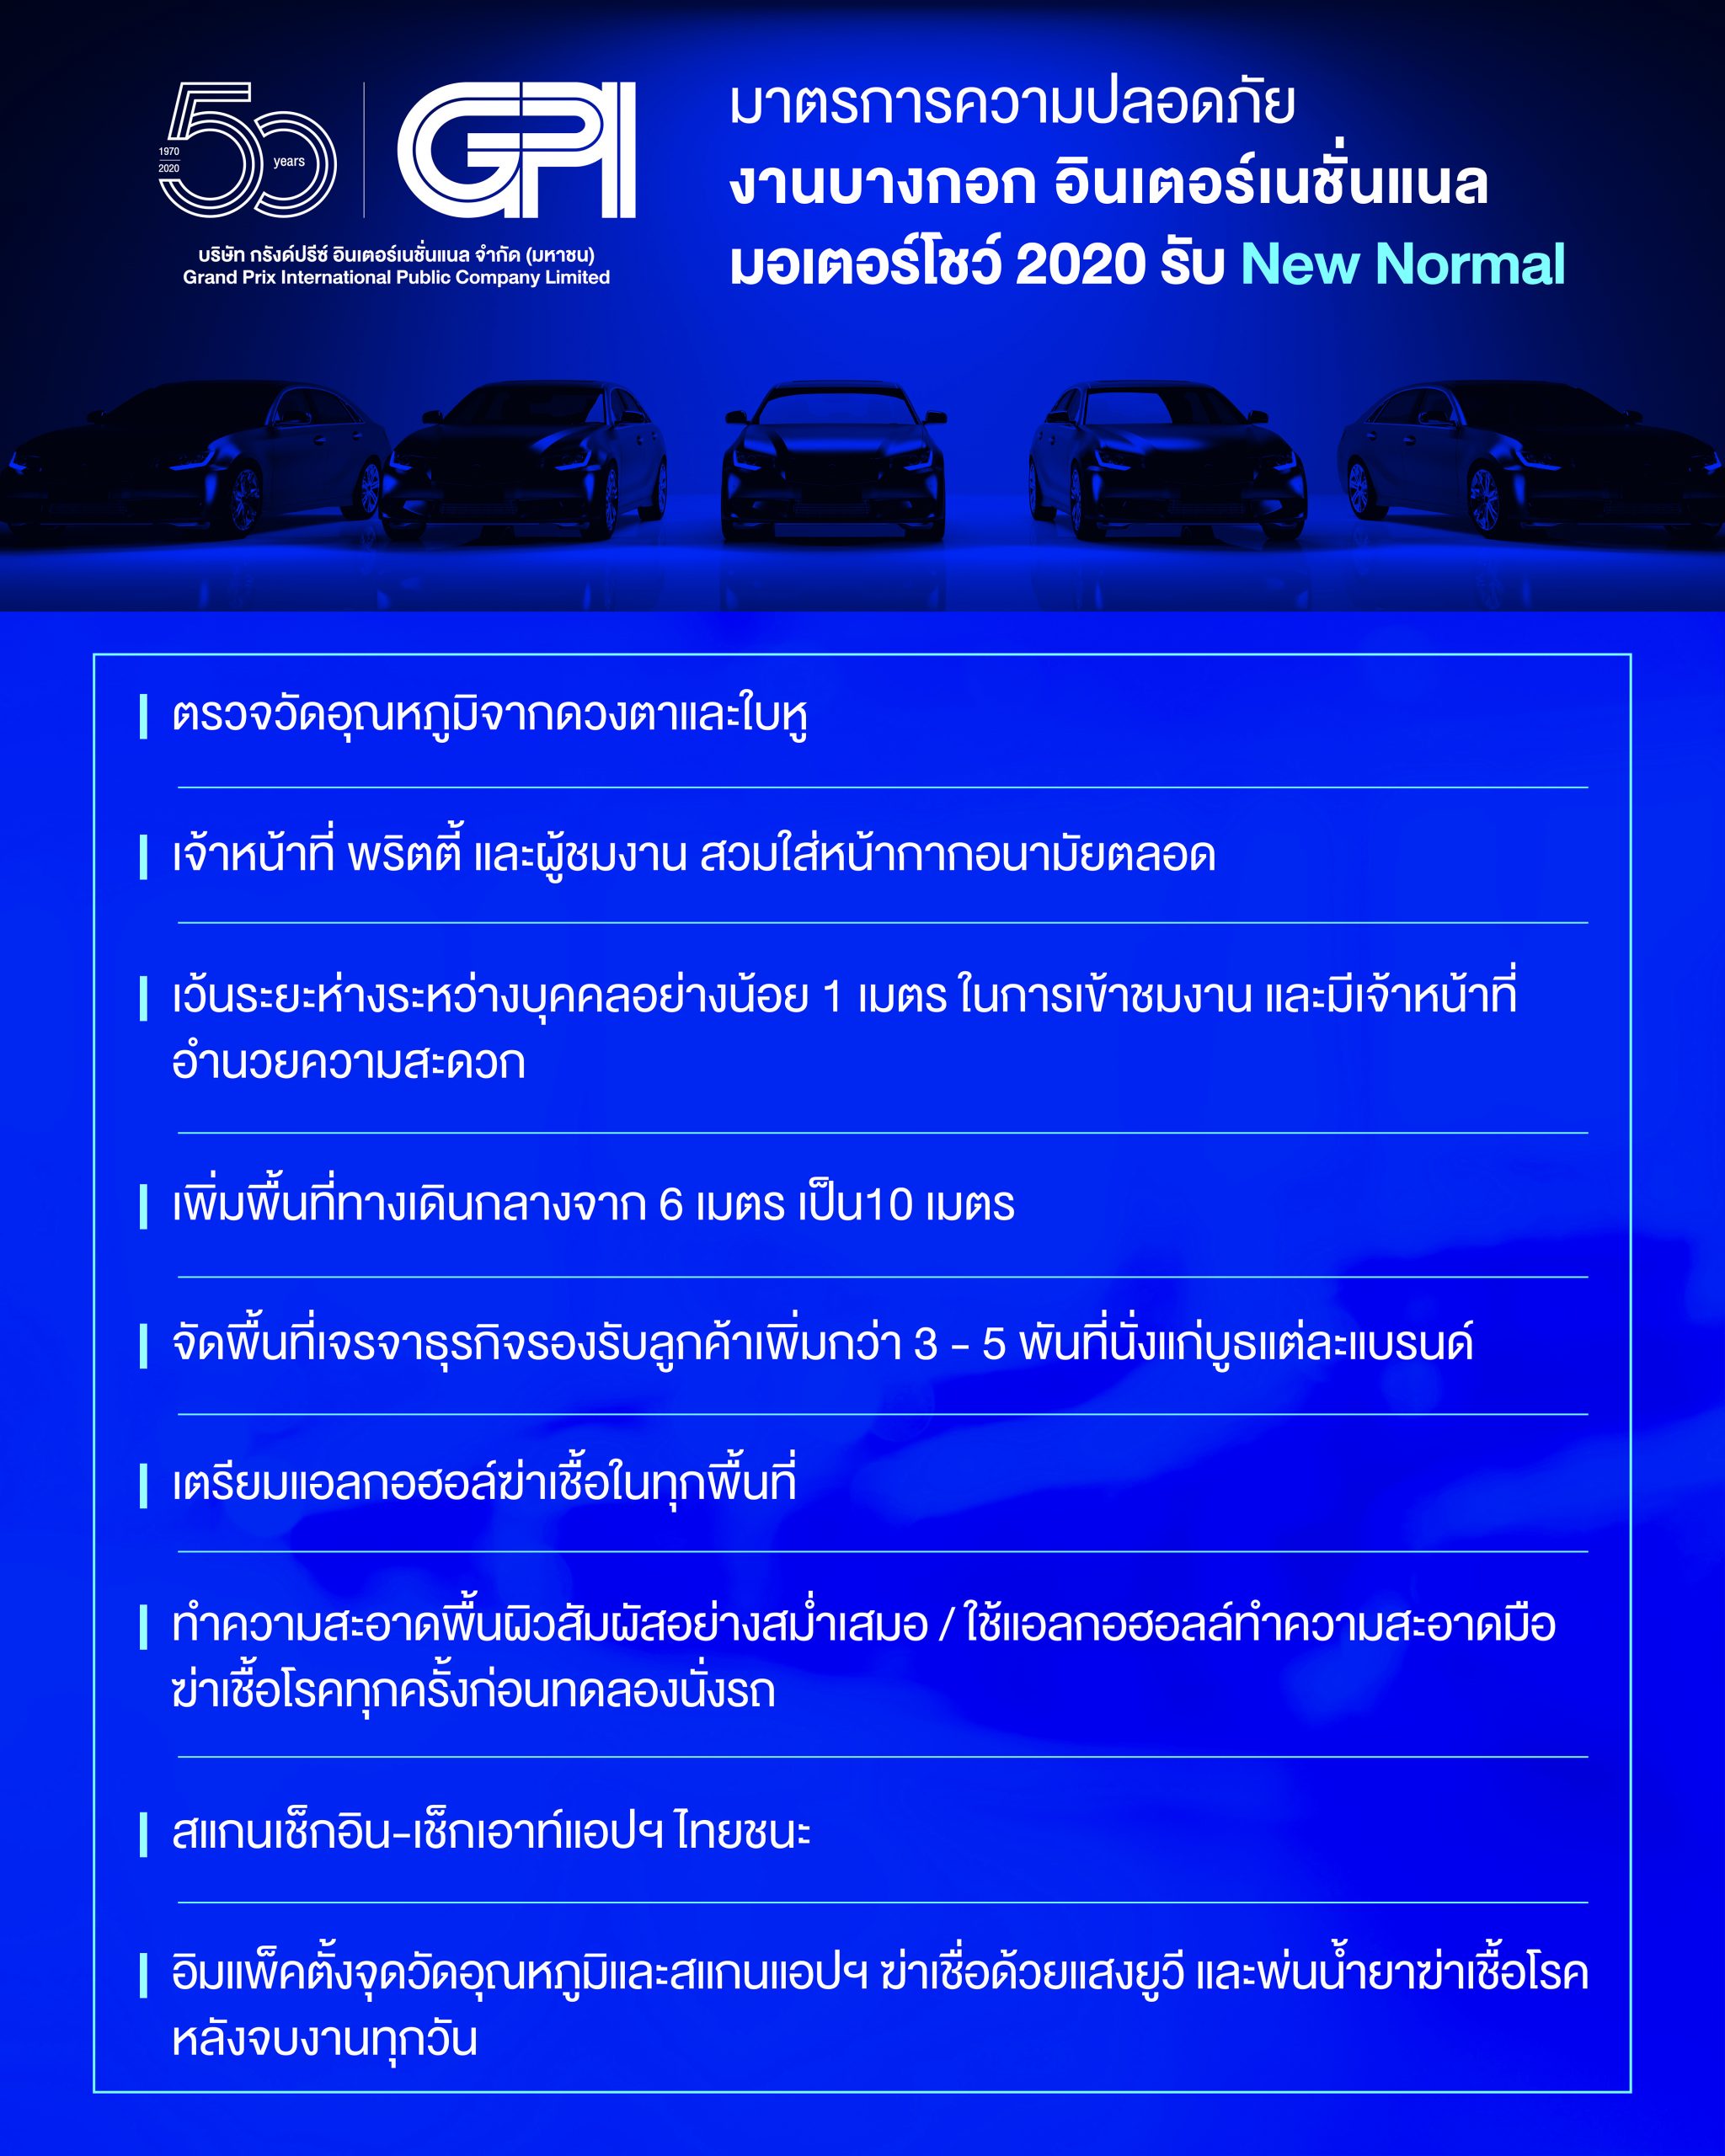 GPI ปฏิวัติมอเตอร์โชว์ เซ็ตมาตรฐานใหม่แบบ New Normal ชูไฮไลต์งานแรกของโลกหลัง COVID-19 และเป็นเอ็กซิบิชั่นใหญ่สุดในไทย เปิดตัว Virtual Motor Show